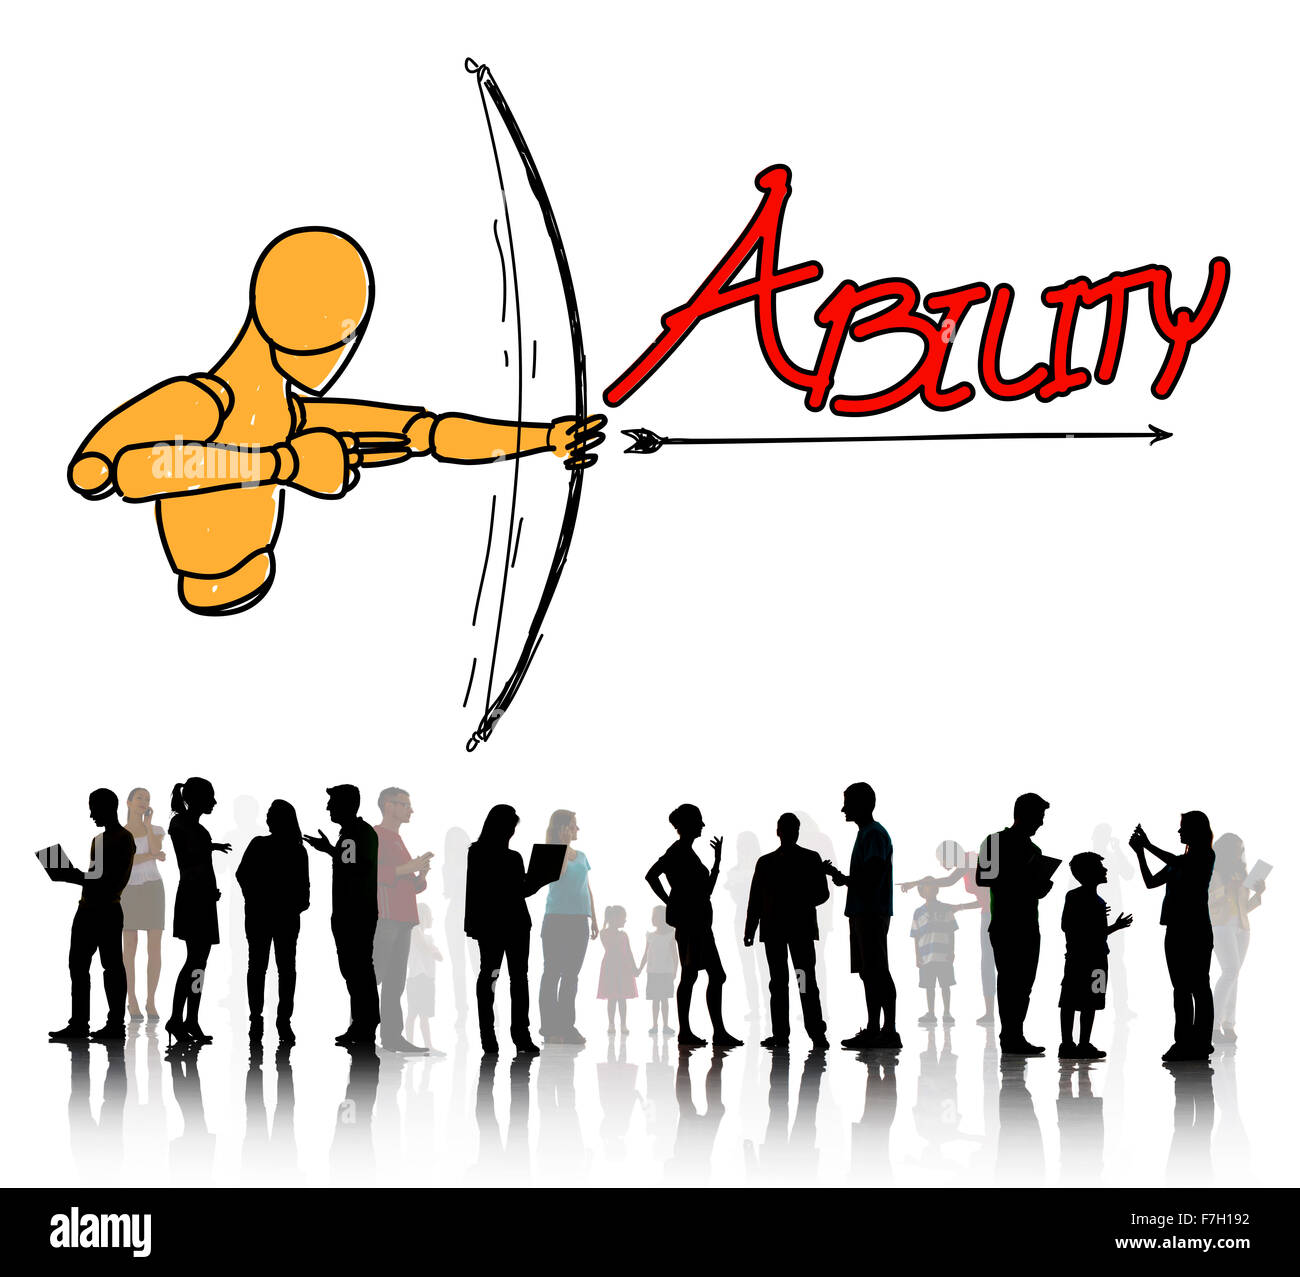 Ability Talent Strength Archery Aim Concept Stock Photo